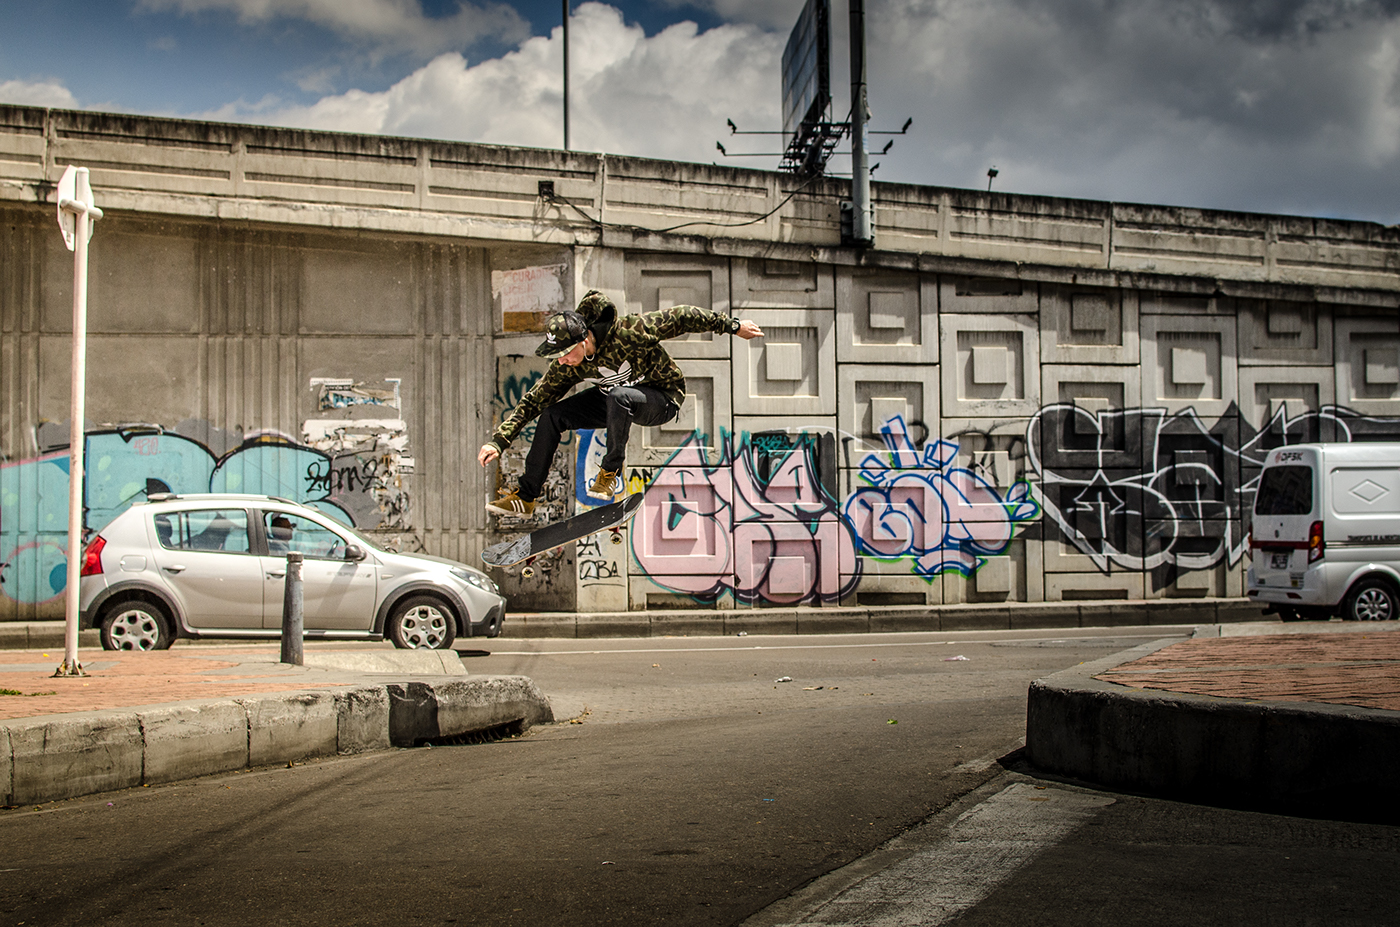 skateboard skateboarding sport Photography  xtremesport   sportsphotography Urban city